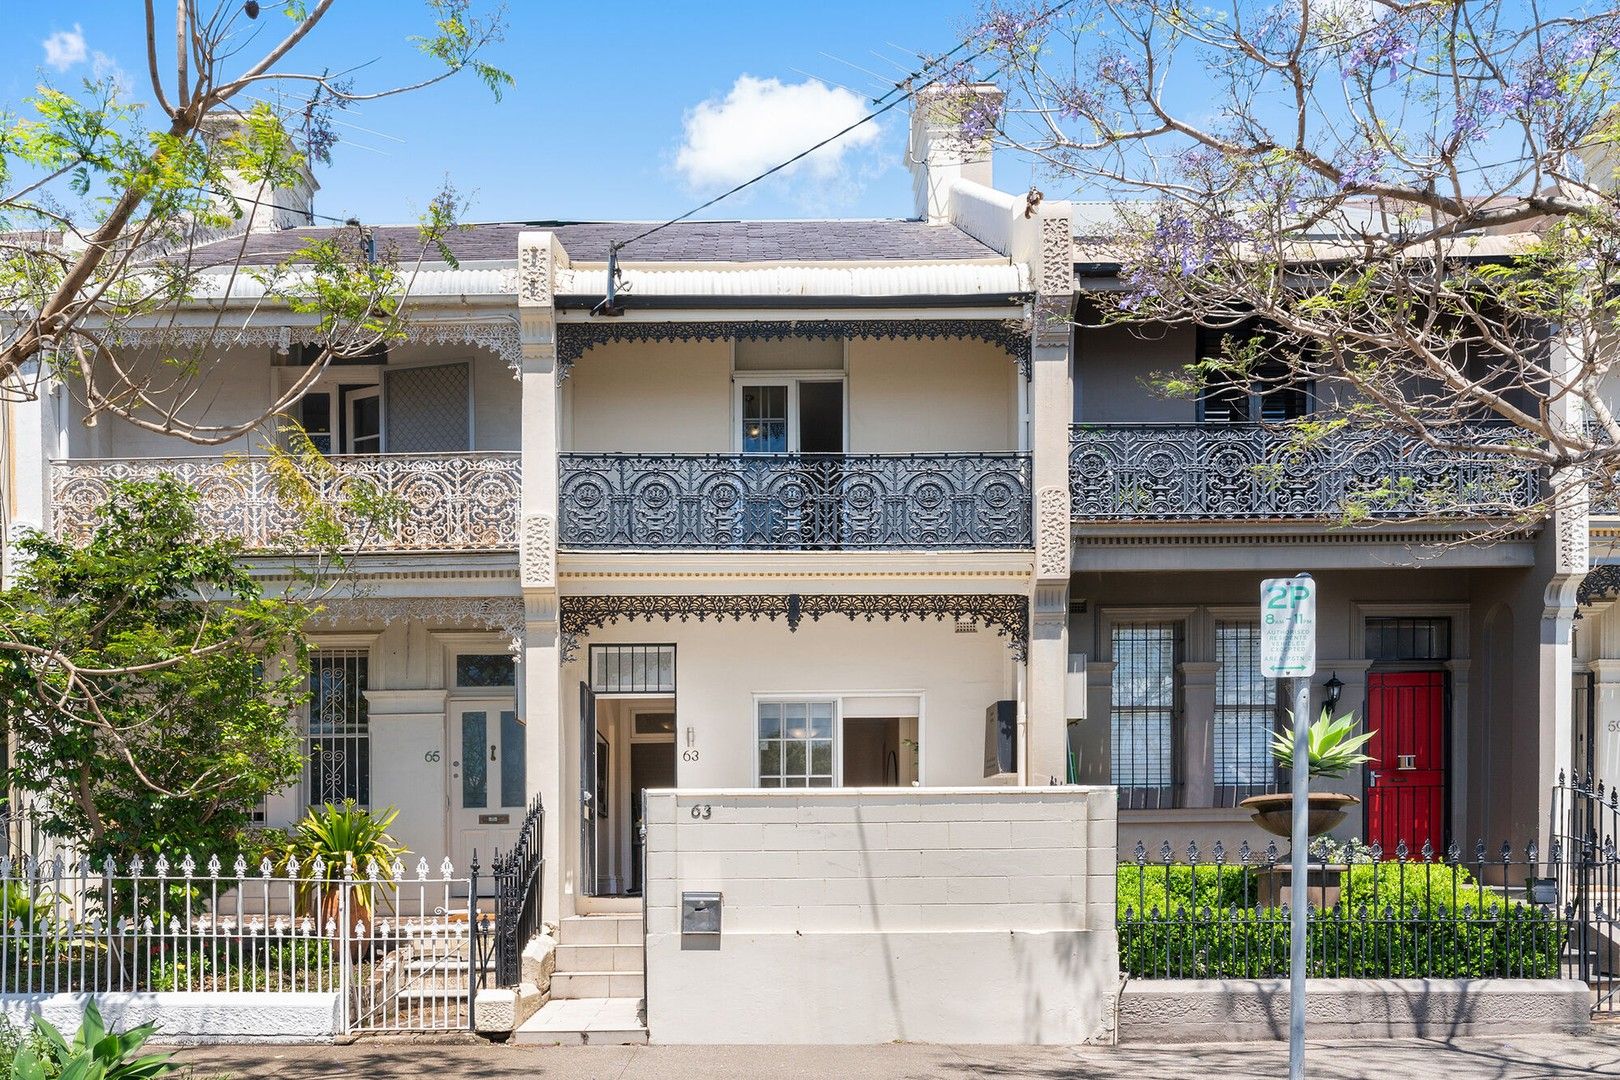 3 bedrooms House in 63 Stafford Street PADDINGTON NSW, 2021